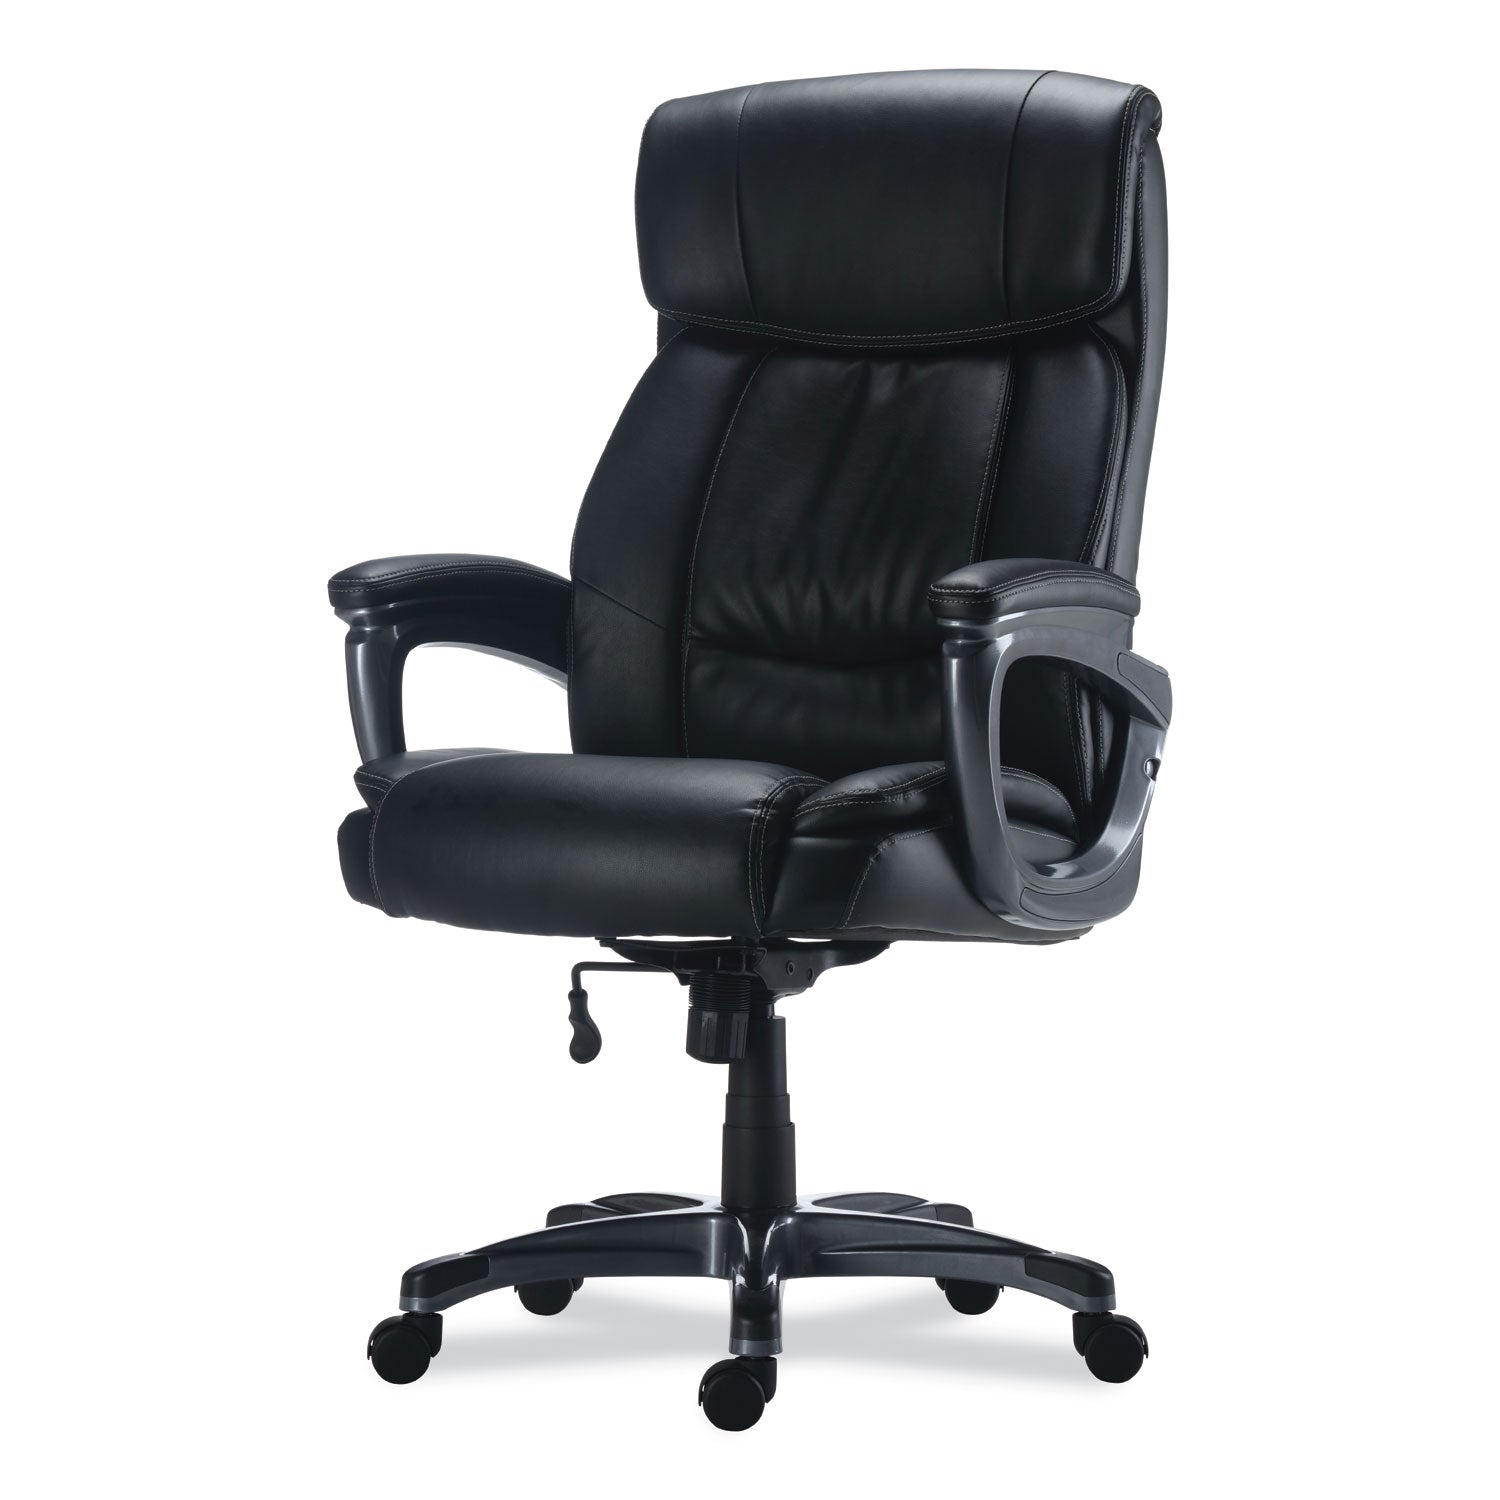 Alera Egino Big and Tall Chair, Supports Up to 400 lb, Black Seat/Back, Black Base - 4